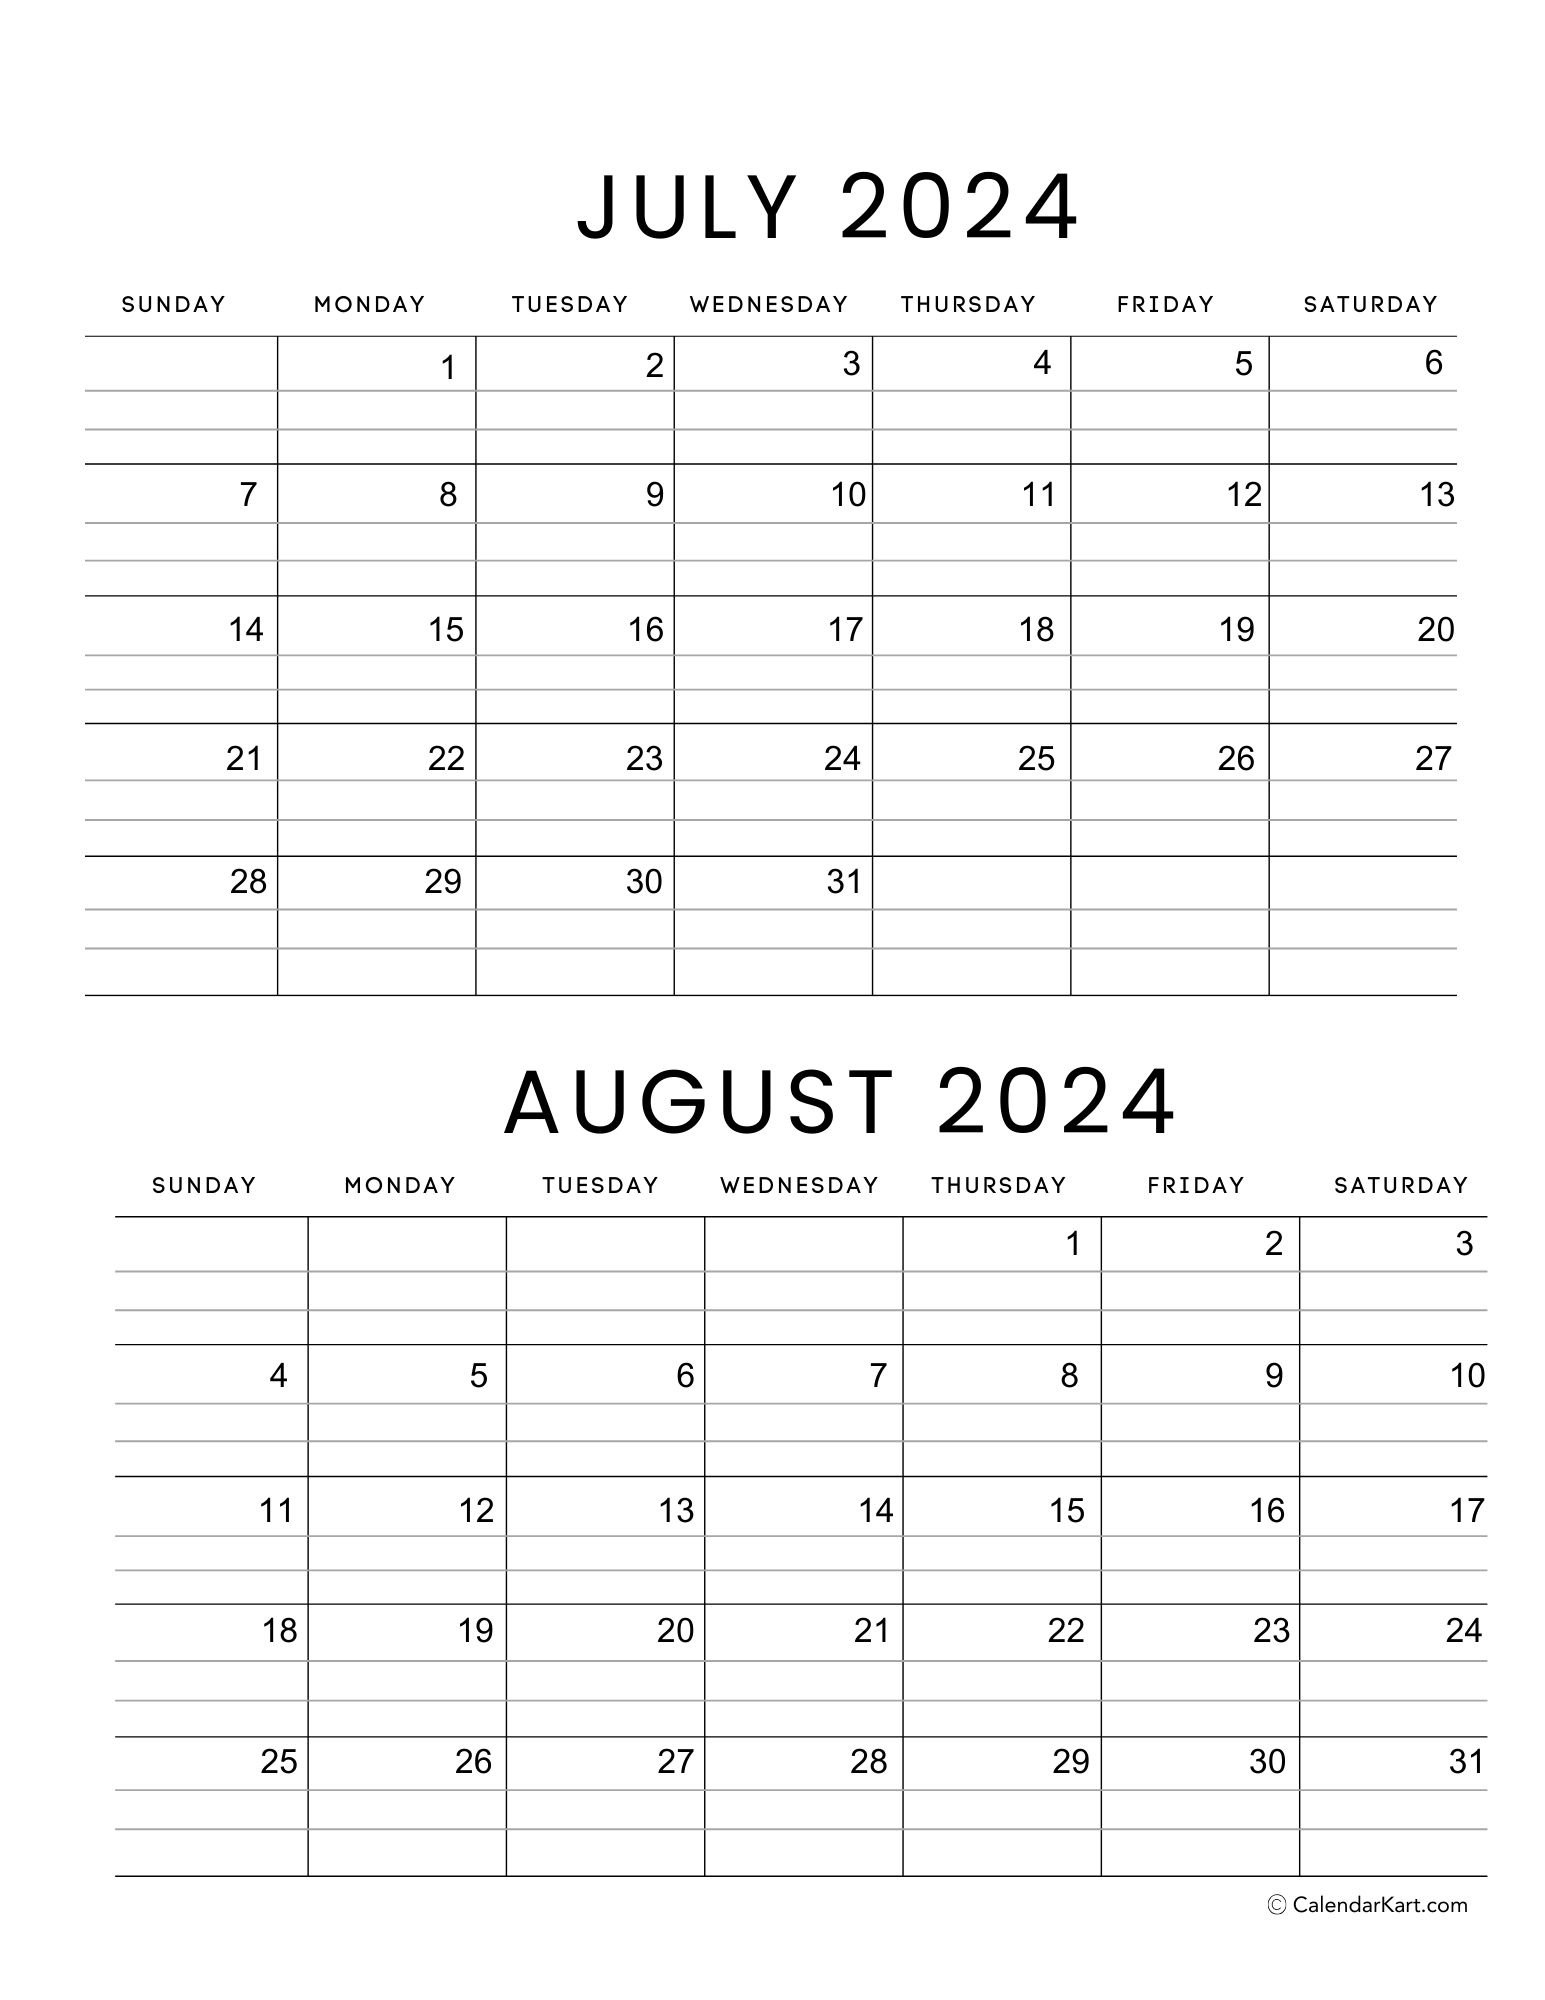 Printable July August 2024 Calendar | Calendarkart | Blank July August 2024 Calendar